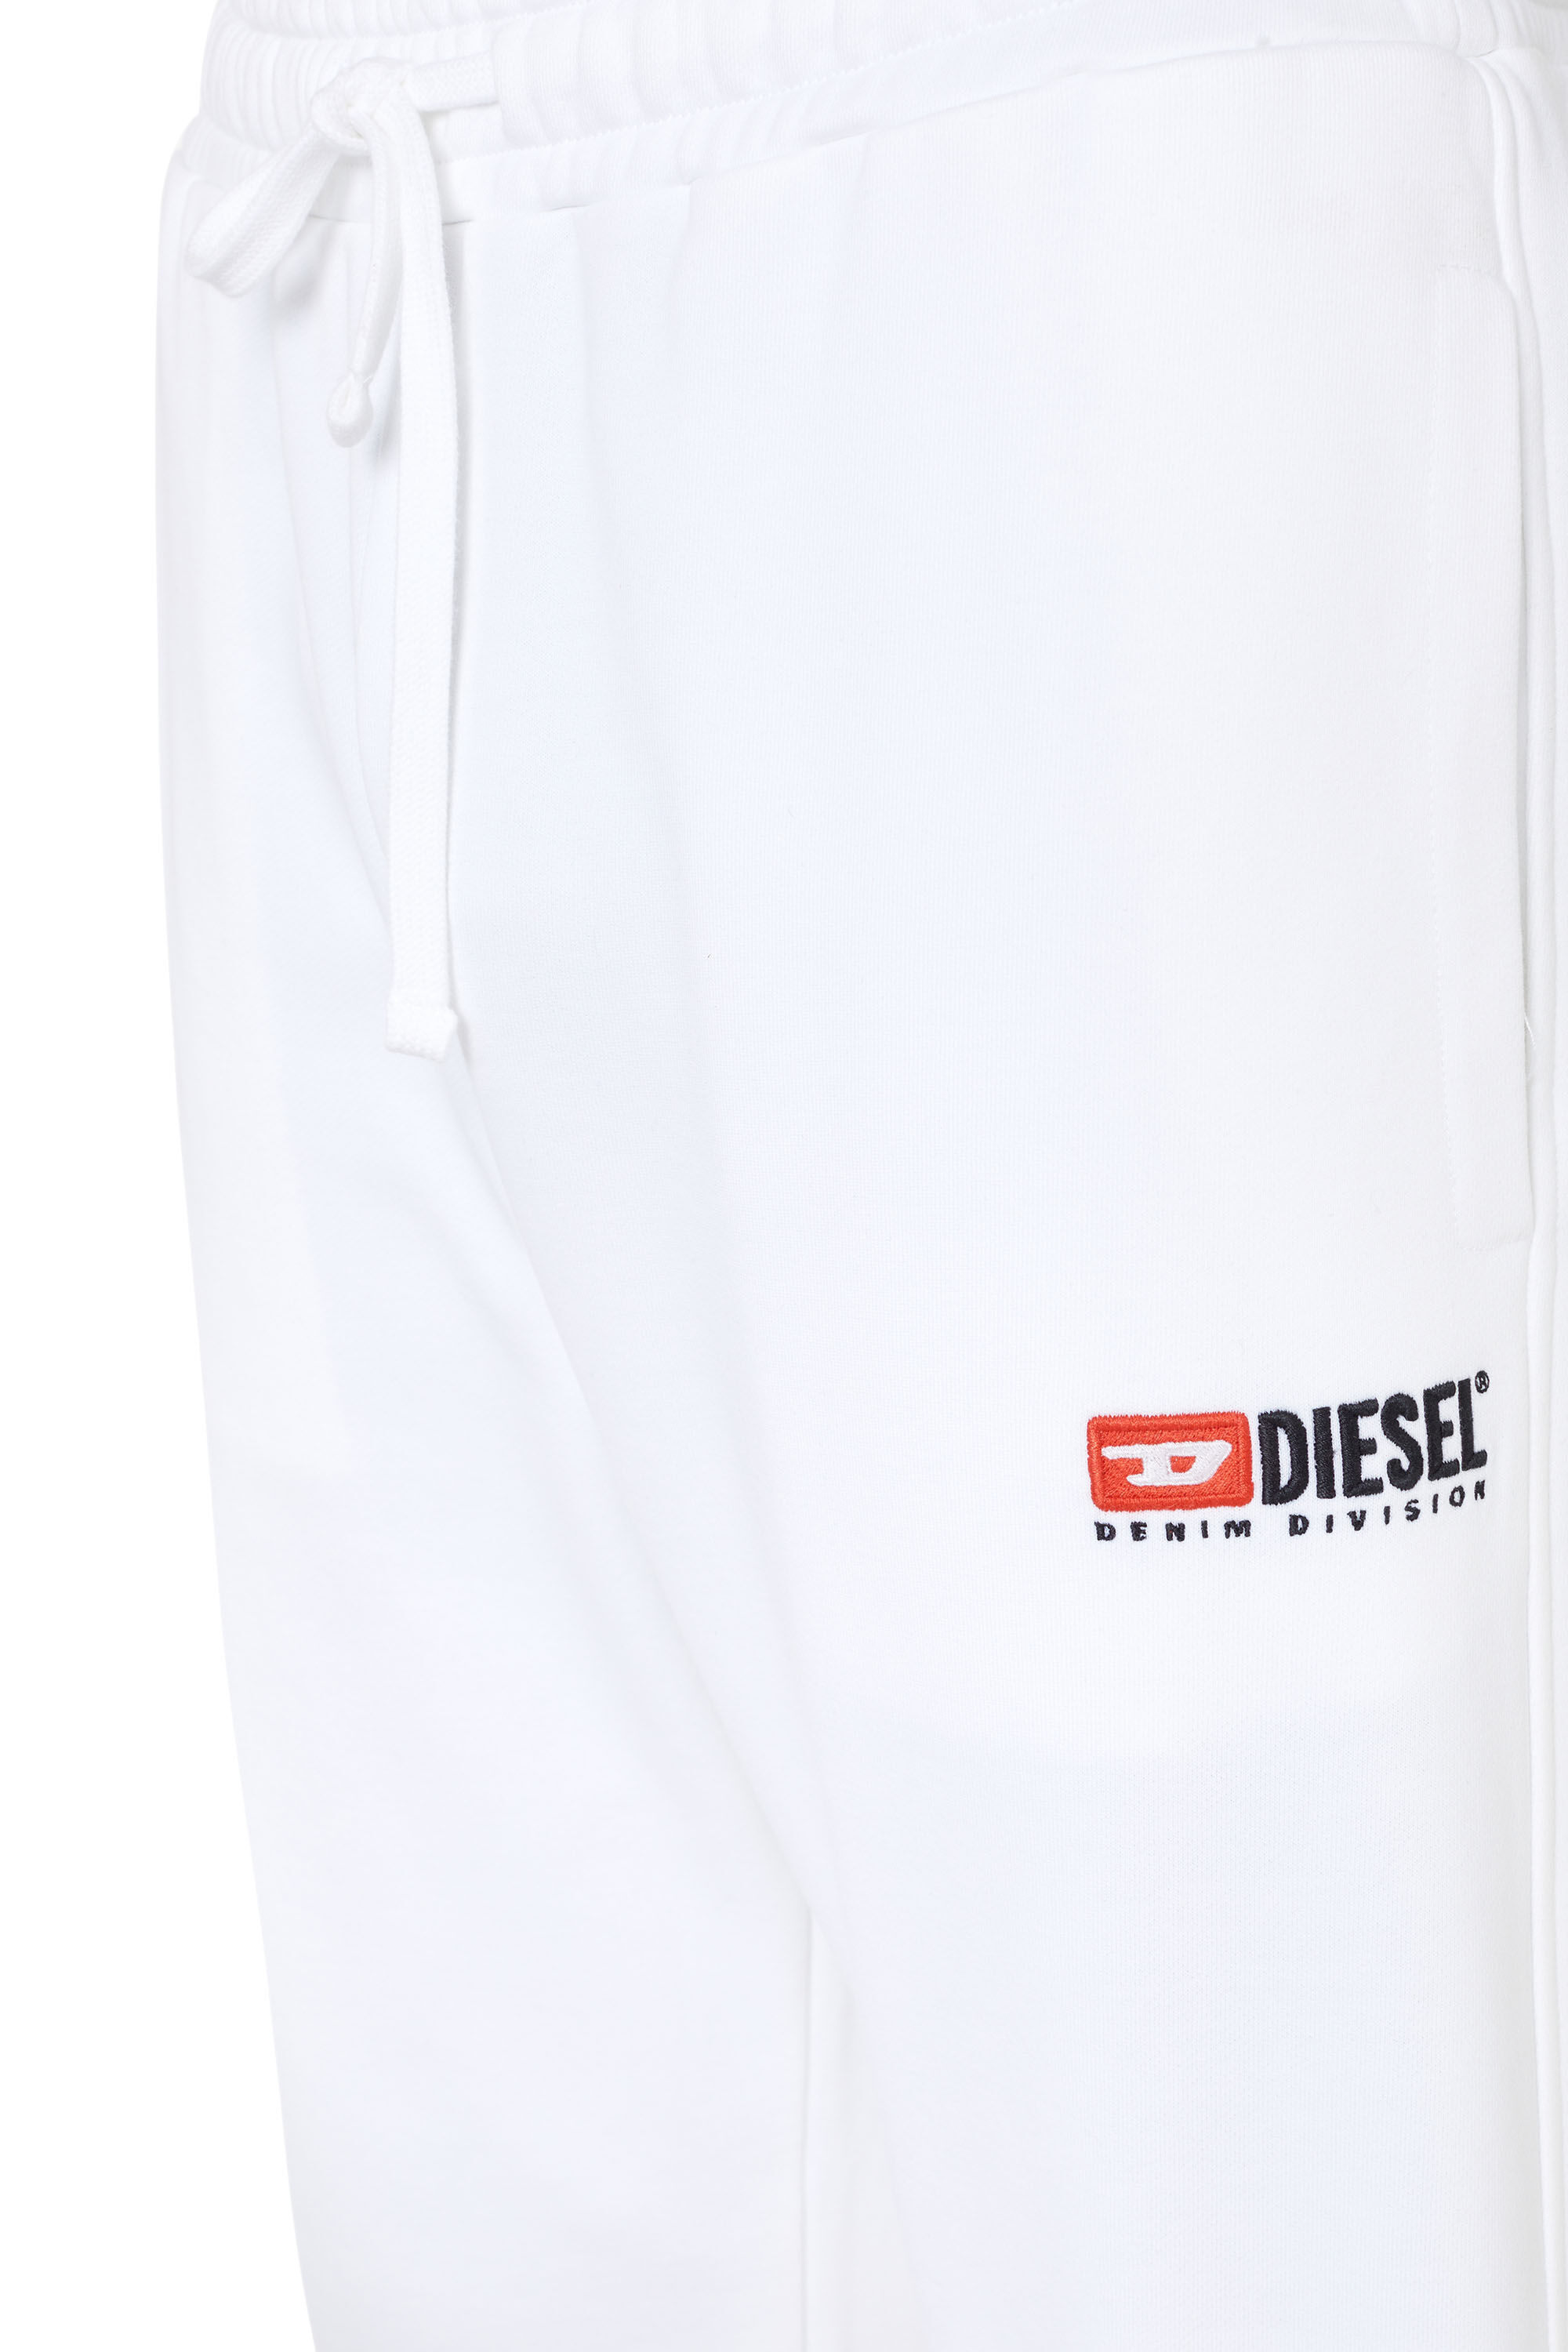 Diesel - P-TARY-DIV, Blanc - Image 6